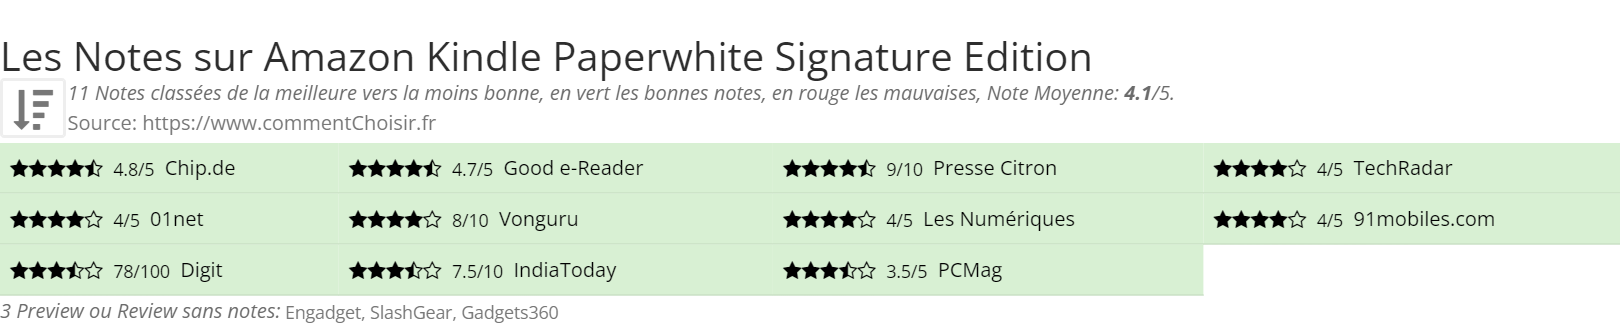 Ratings Amazon Kindle Paperwhite Signature Edition